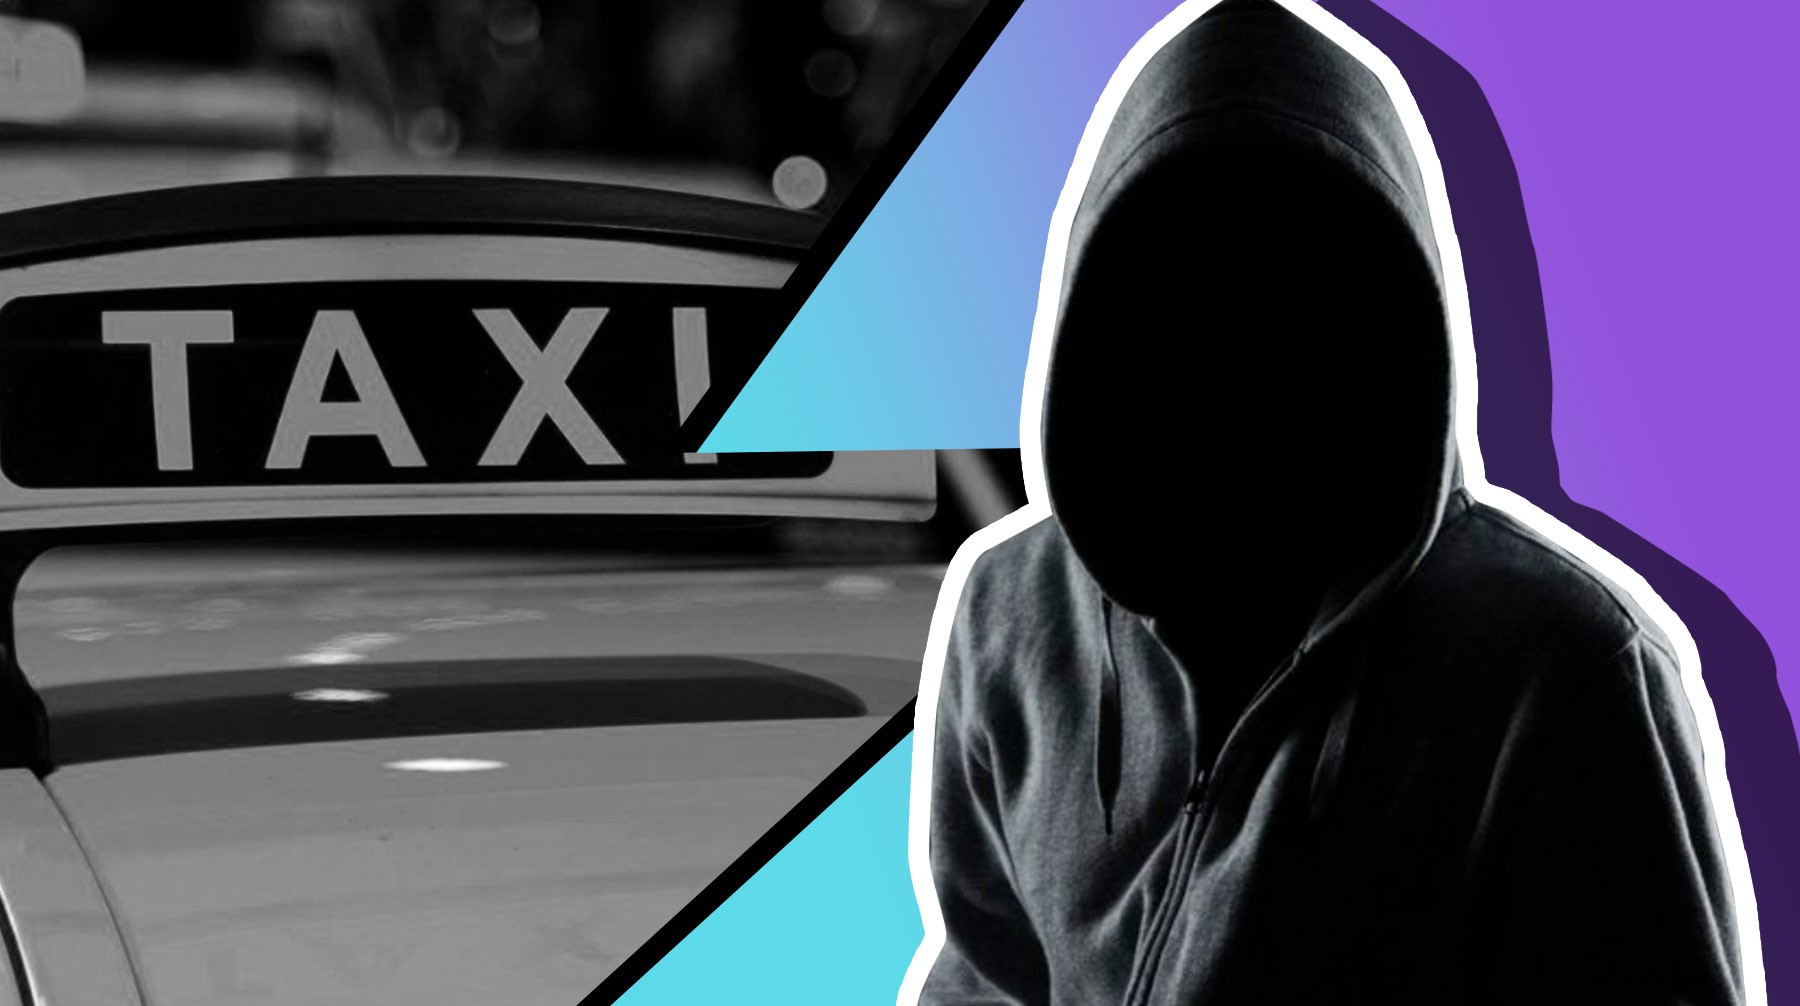 Dailystorm - Наркоман, педофил и эксгибиционист: на кого вы рискуете наткнуться в такси?